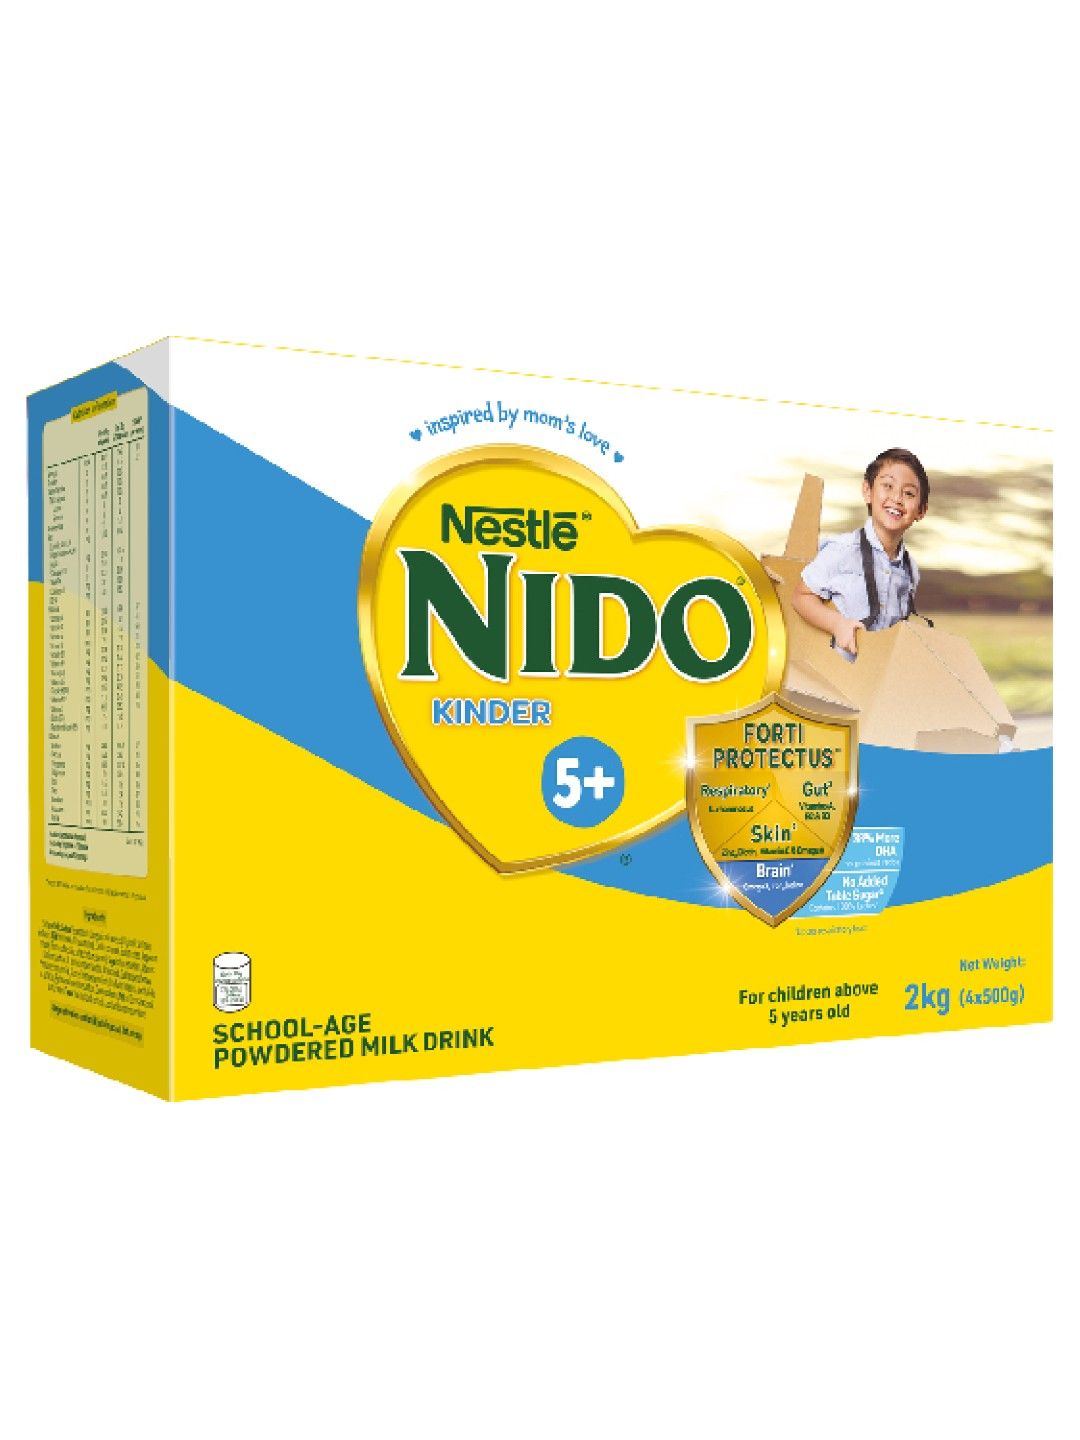 Nido 5+ Powdered Milk Drink For School Age Children Above 5 Years Old (2kg)